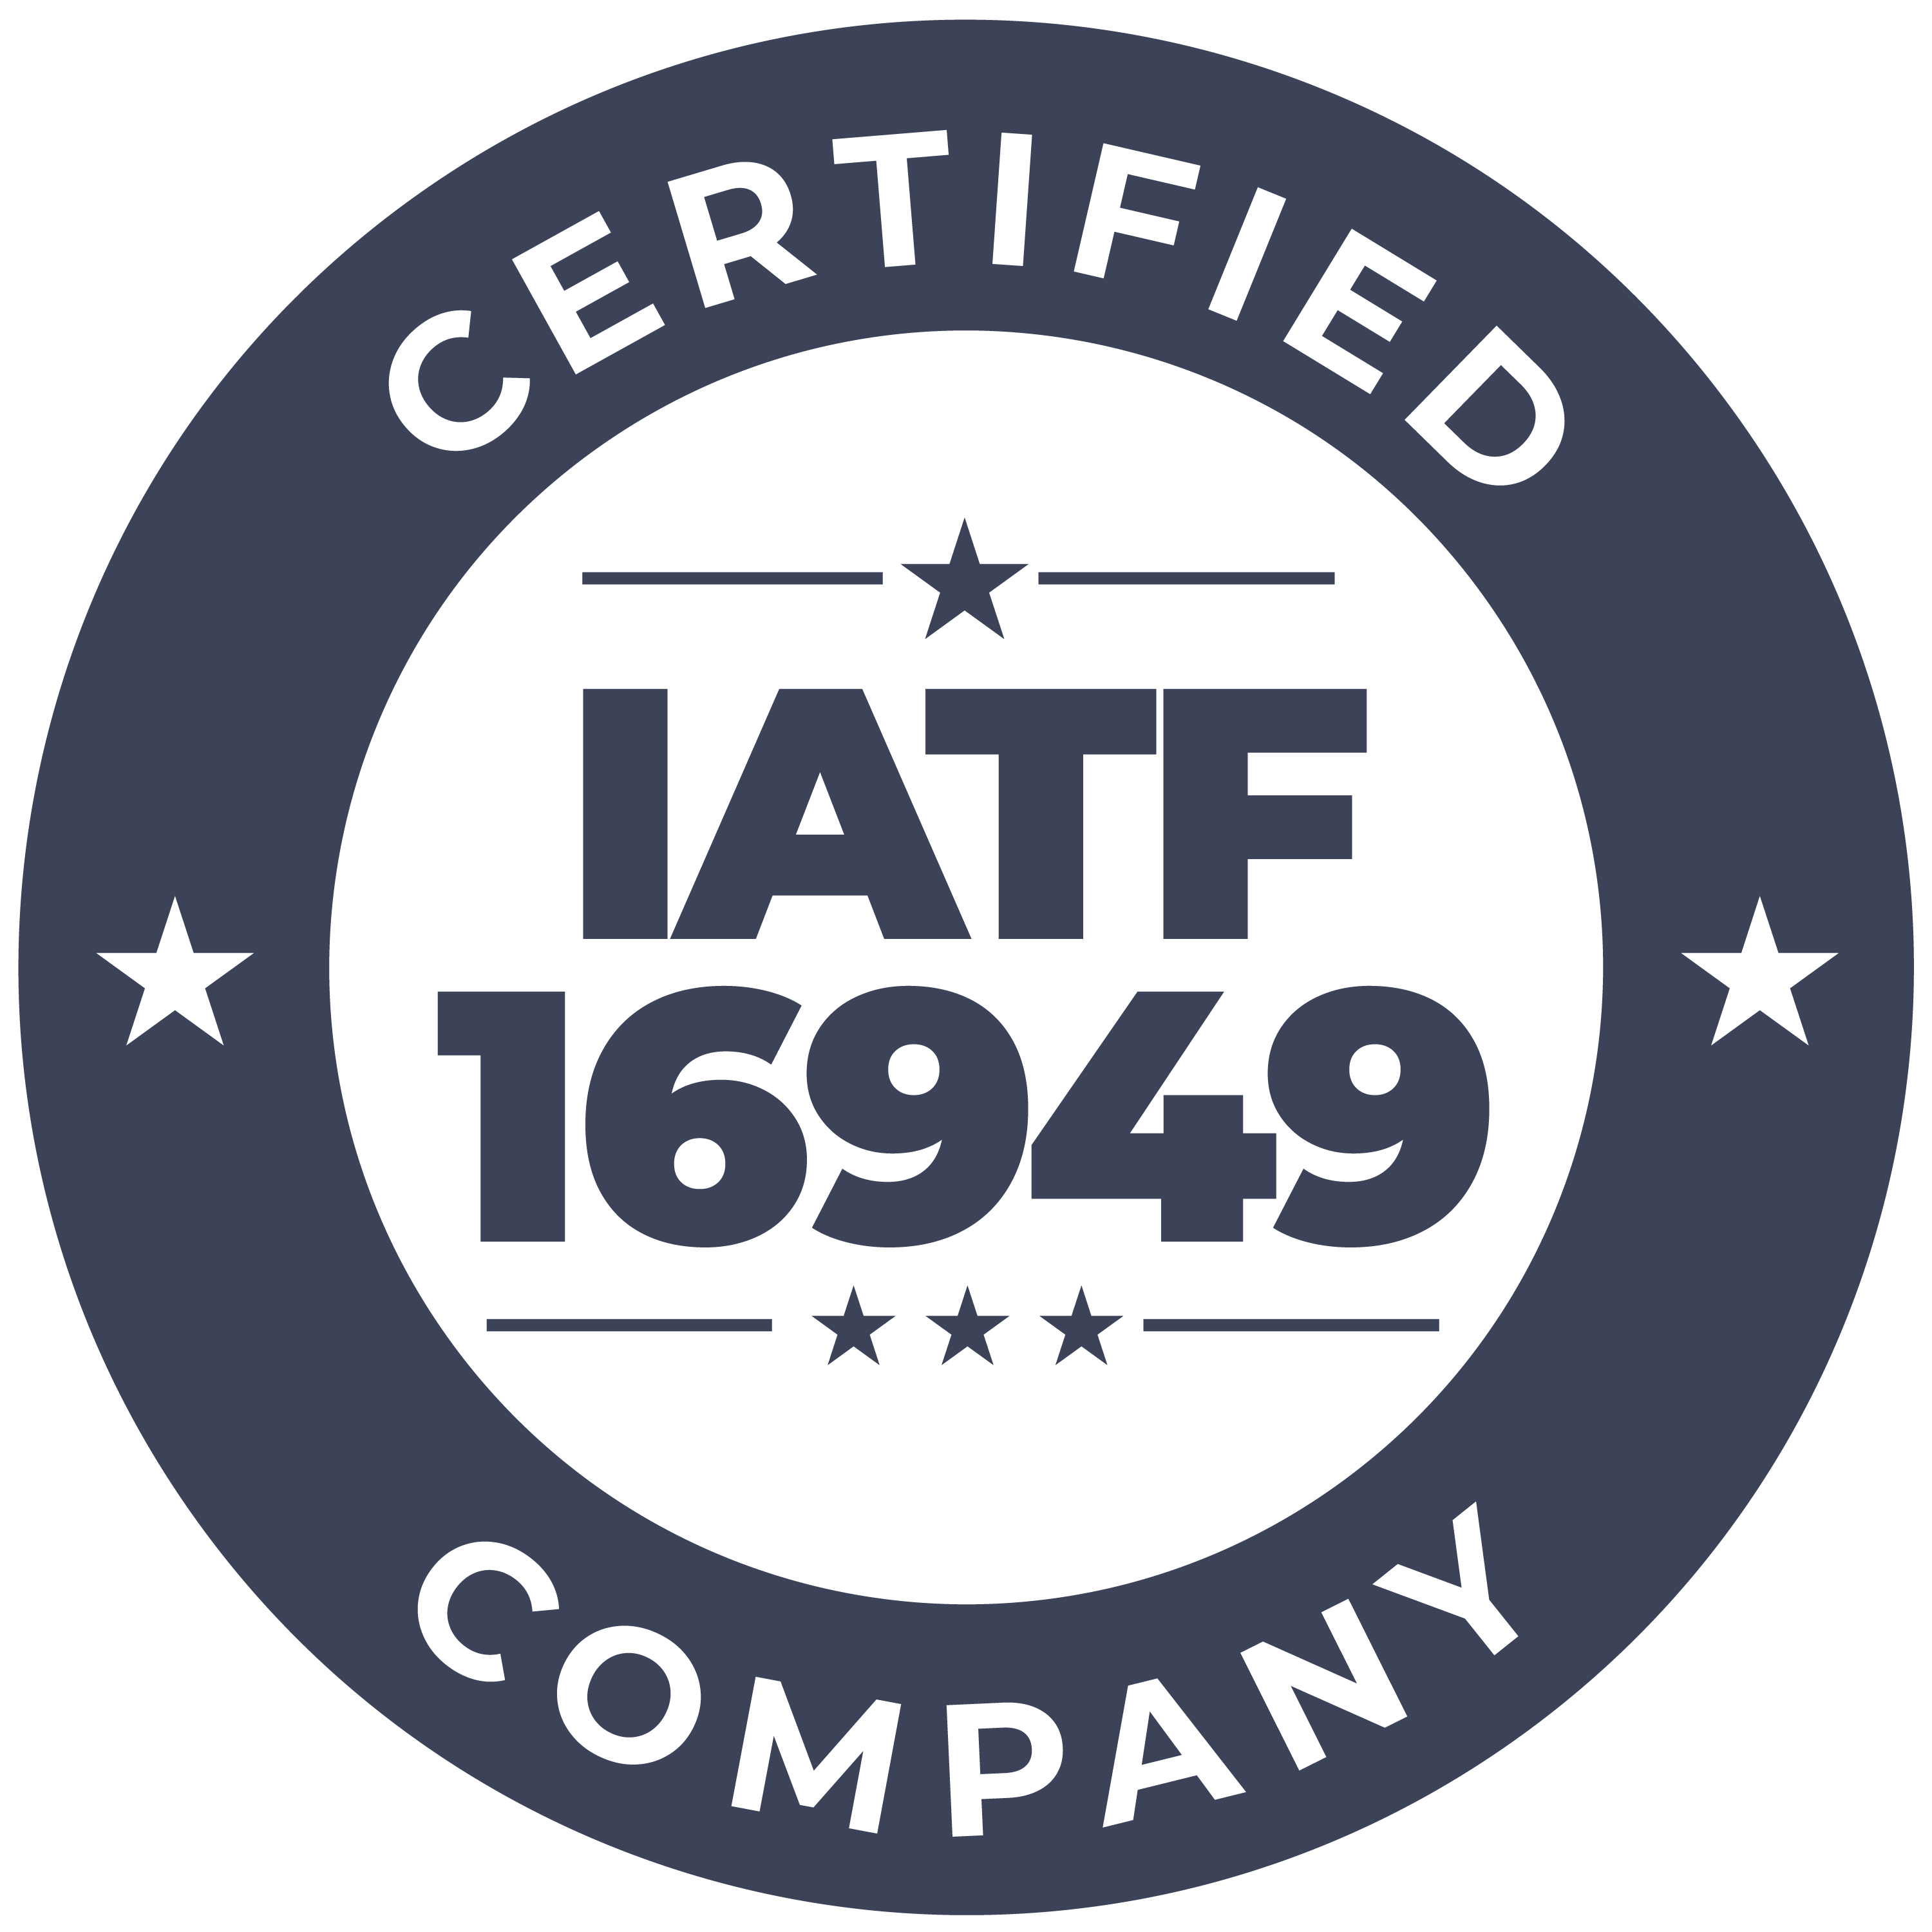 435927101-certifications-02